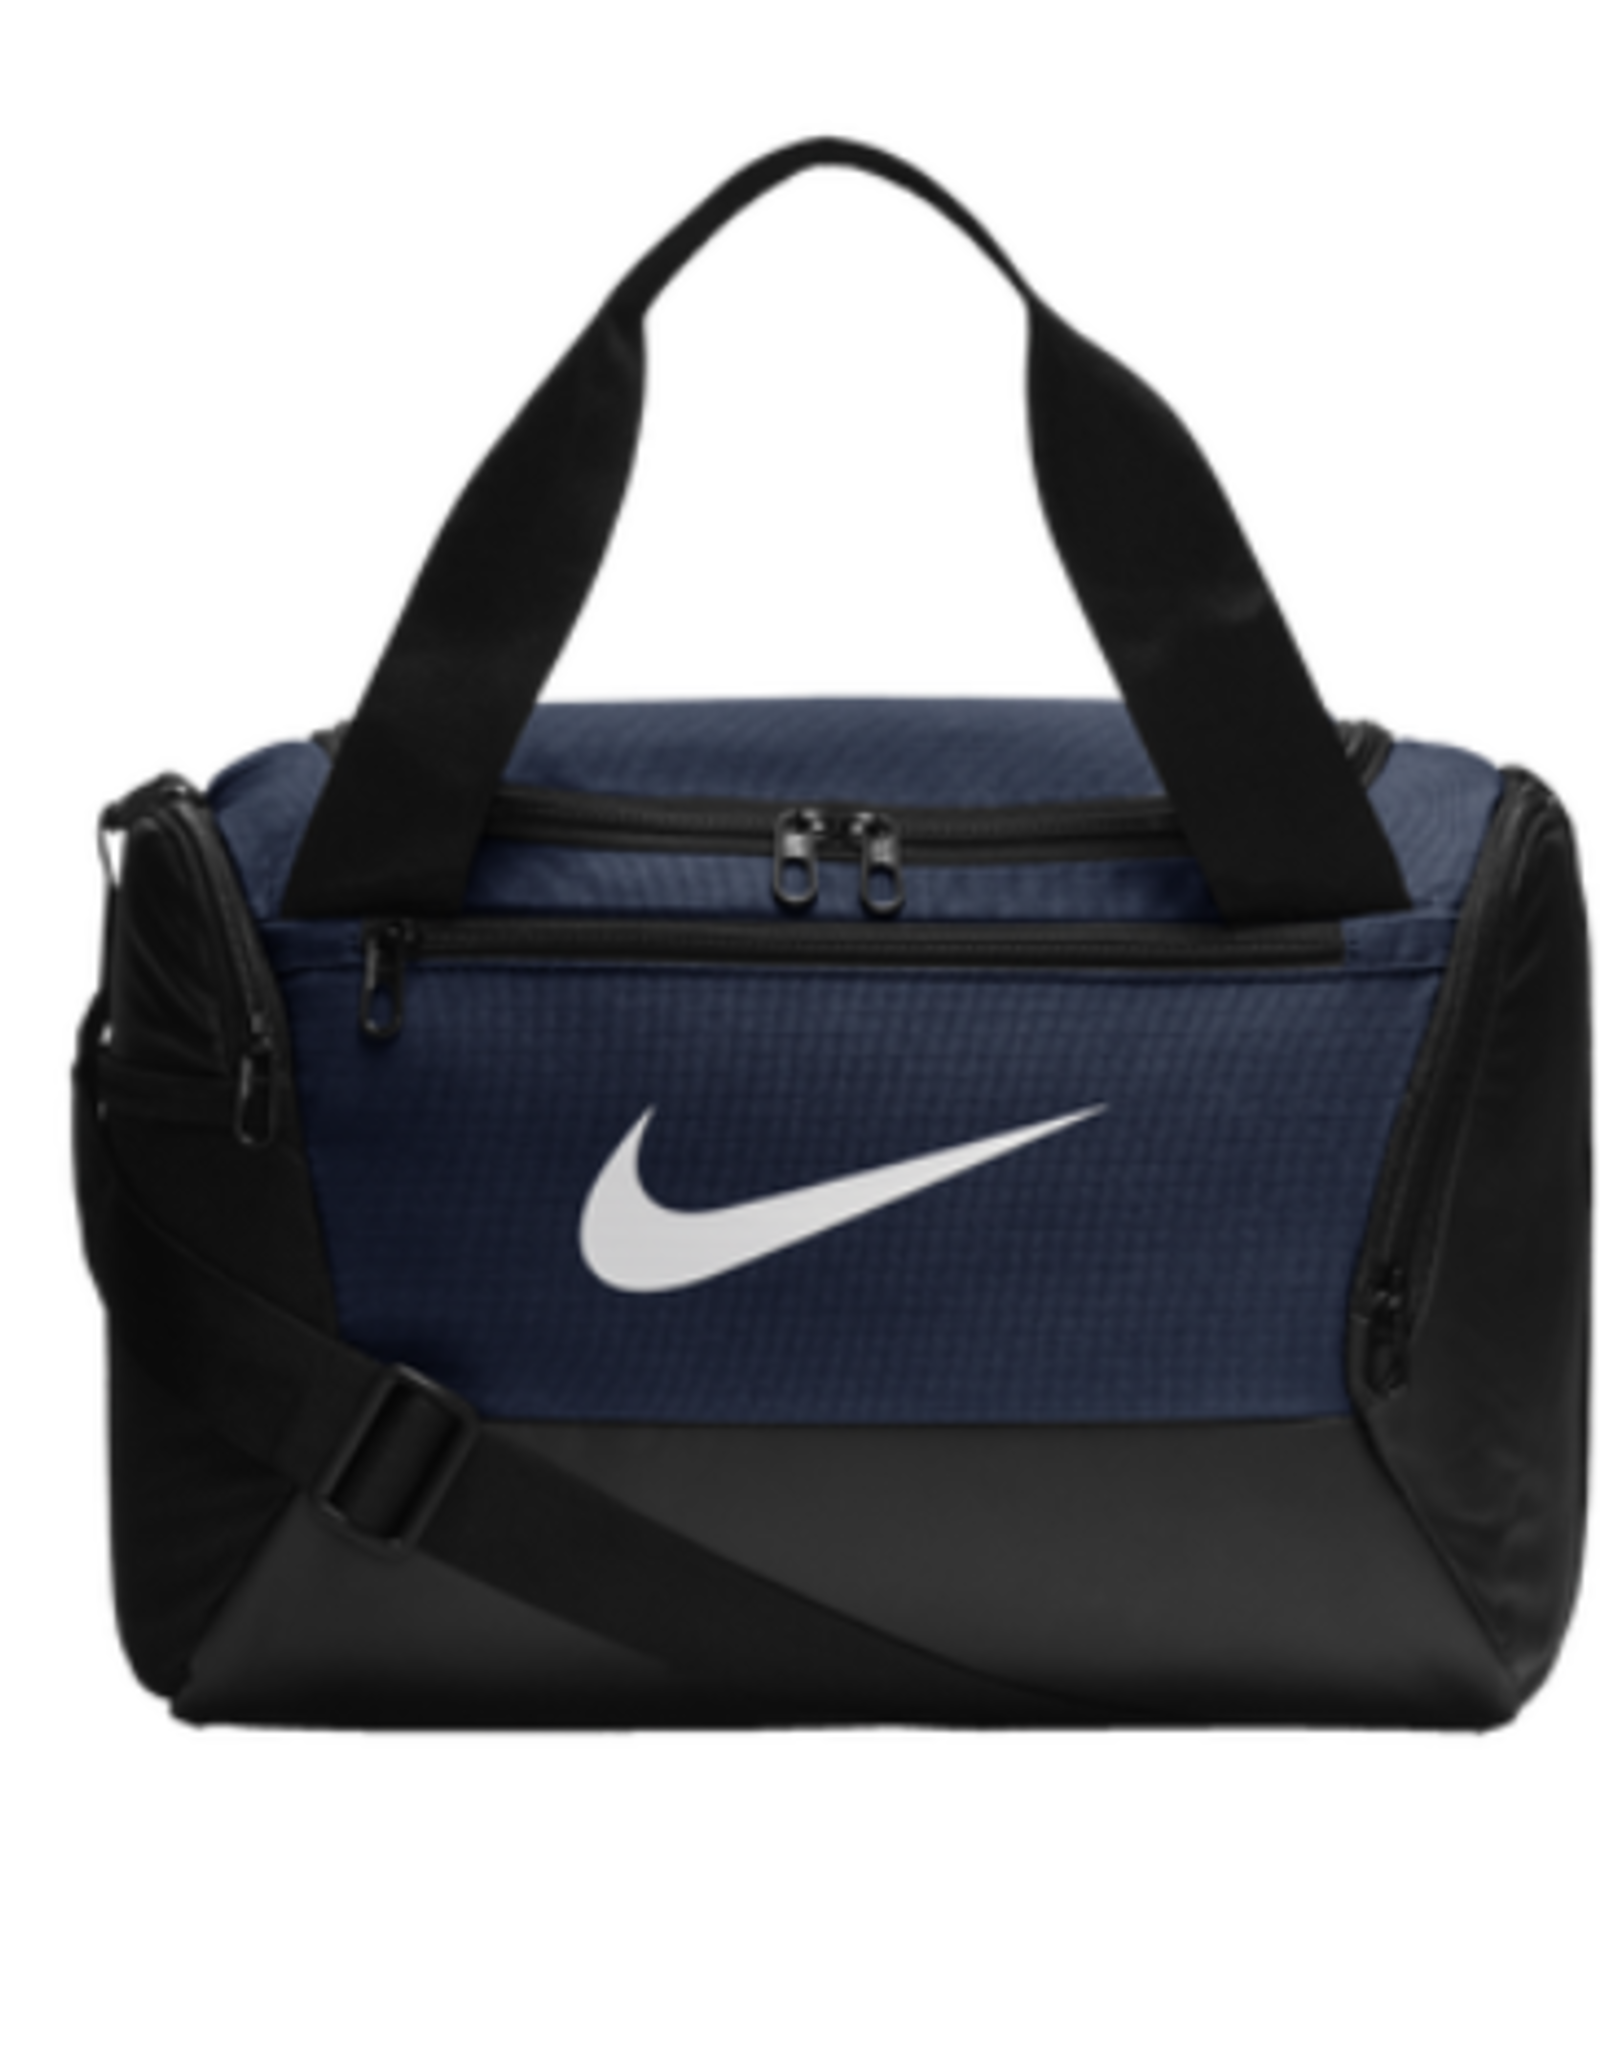 NON-UNIFORM Nike Brasilia Duffle Bag, extra small